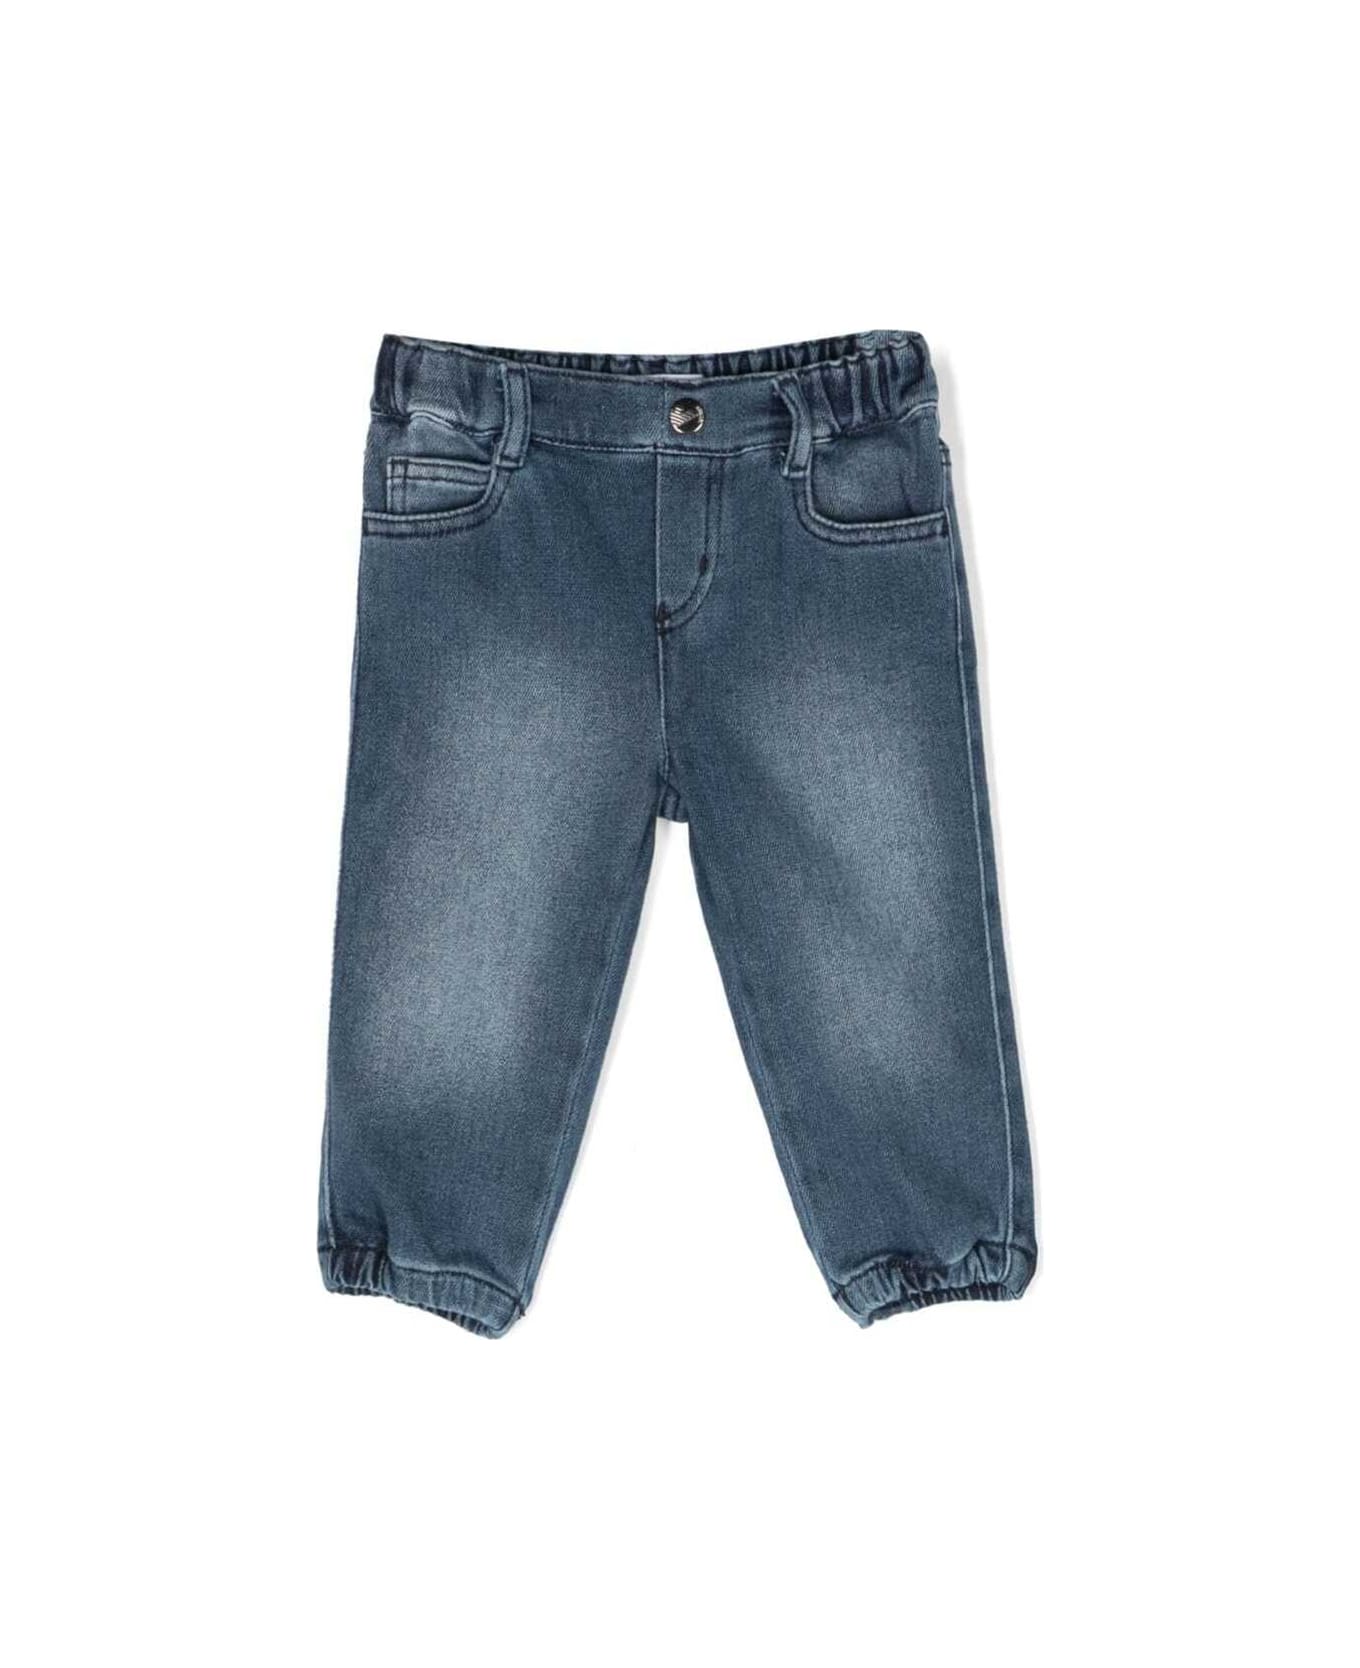 Emporio Armani Pantalone 5 Tasche - Denim Blu Md